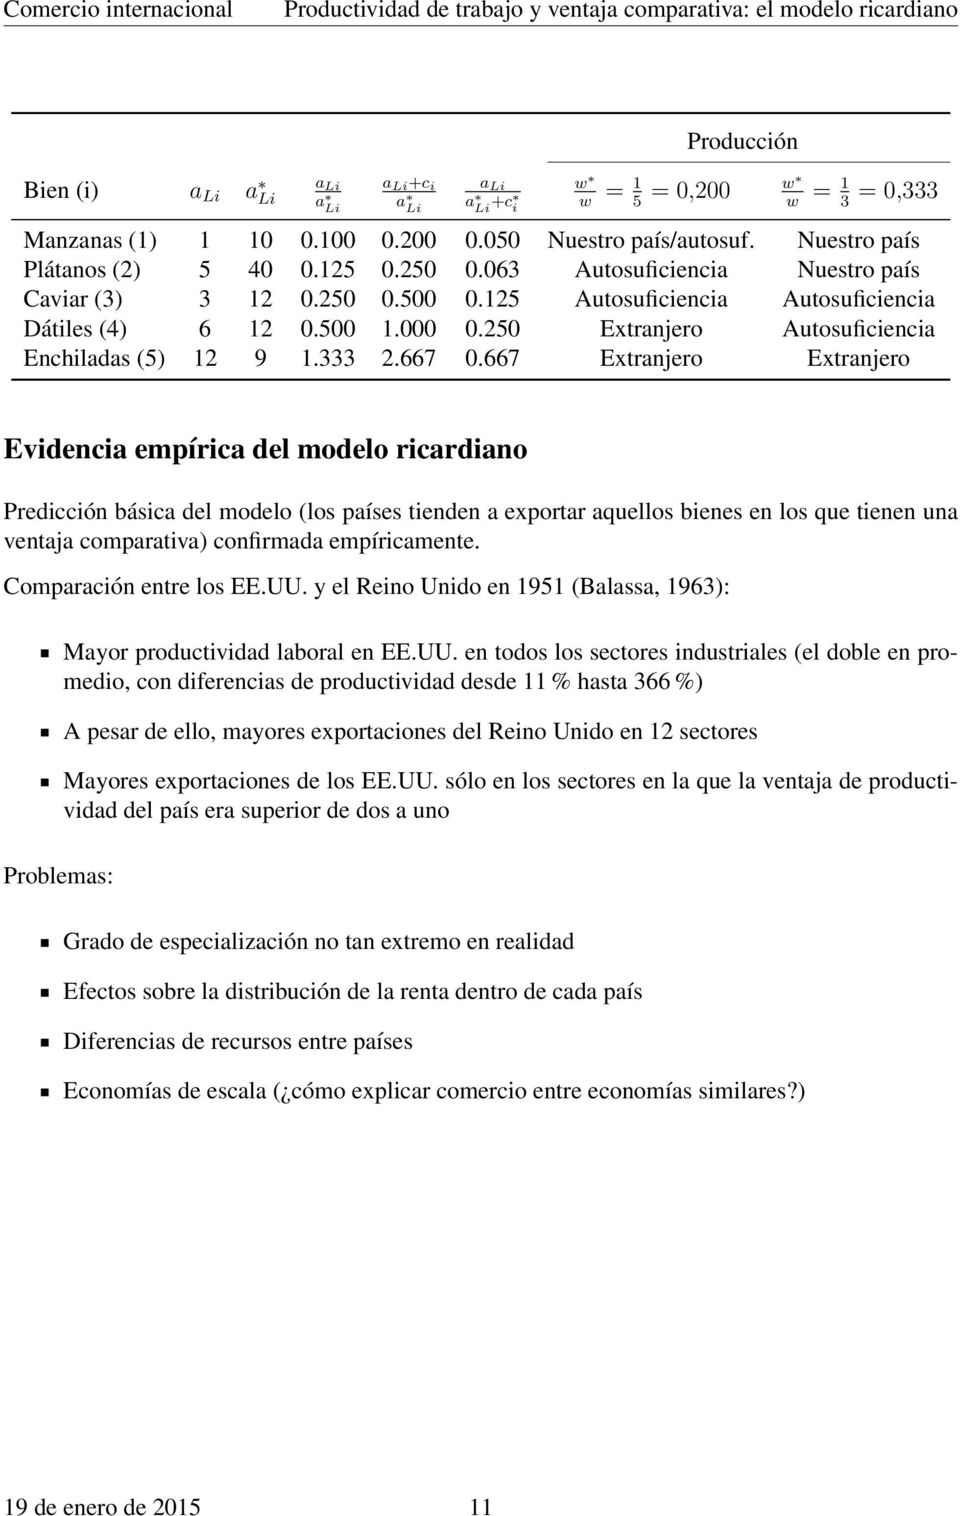 125 Autosuficiencia Autosuficiencia Dátiles (4) 6 12 0.500 1.000 0.250 Extranjero Autosuficiencia Enchiladas (5) 12 9 1.333 2.667 0.